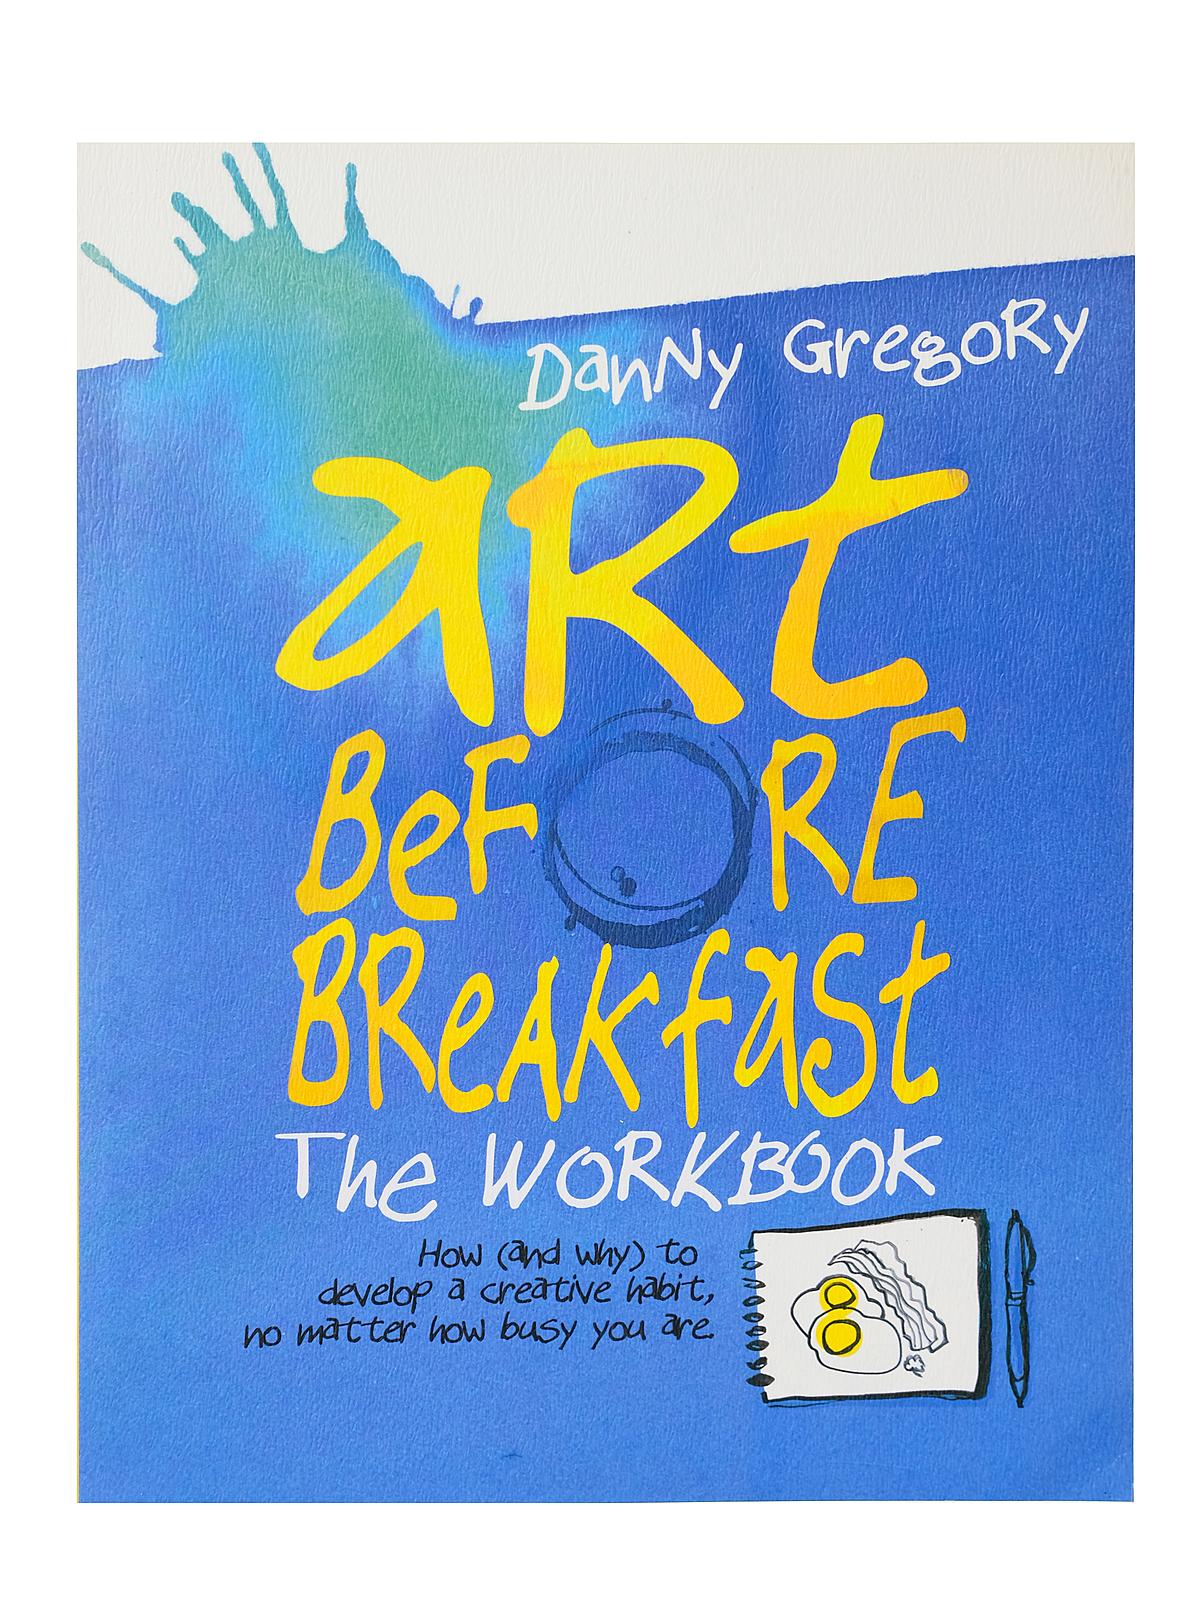 Art Brfore Breakfast: The Workbook Each